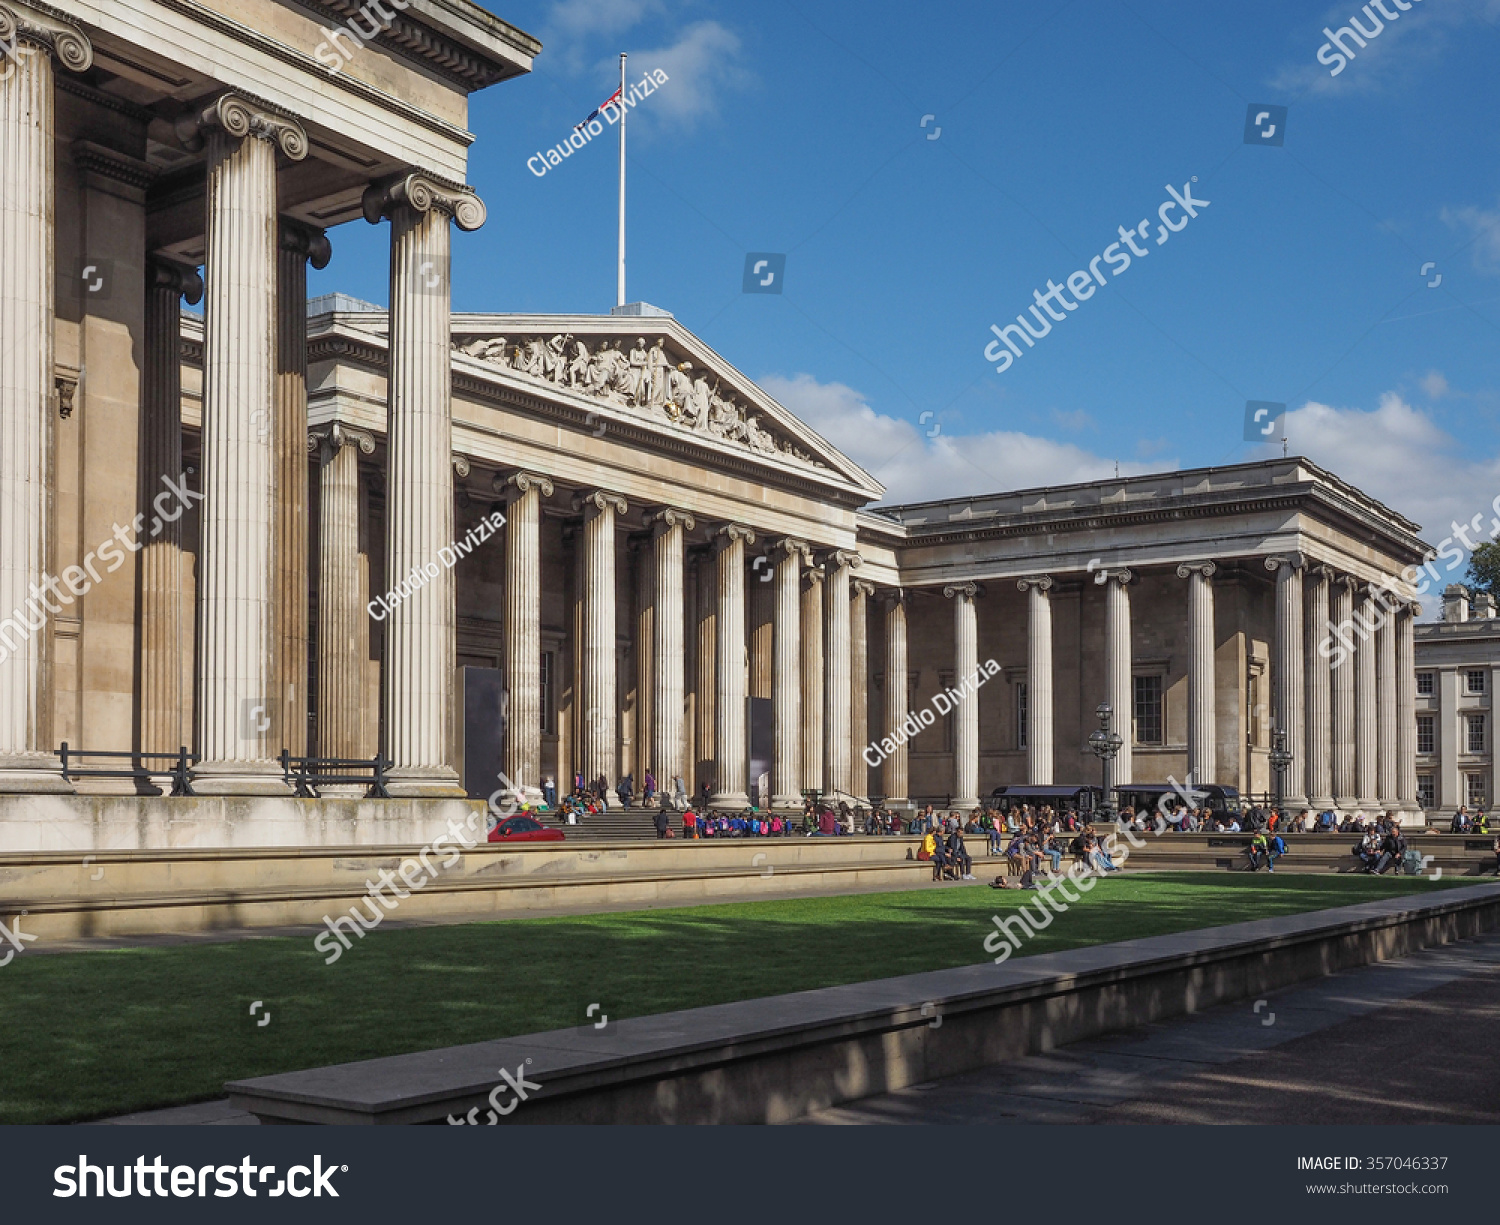 The British Museum in London, England, UK #357046337